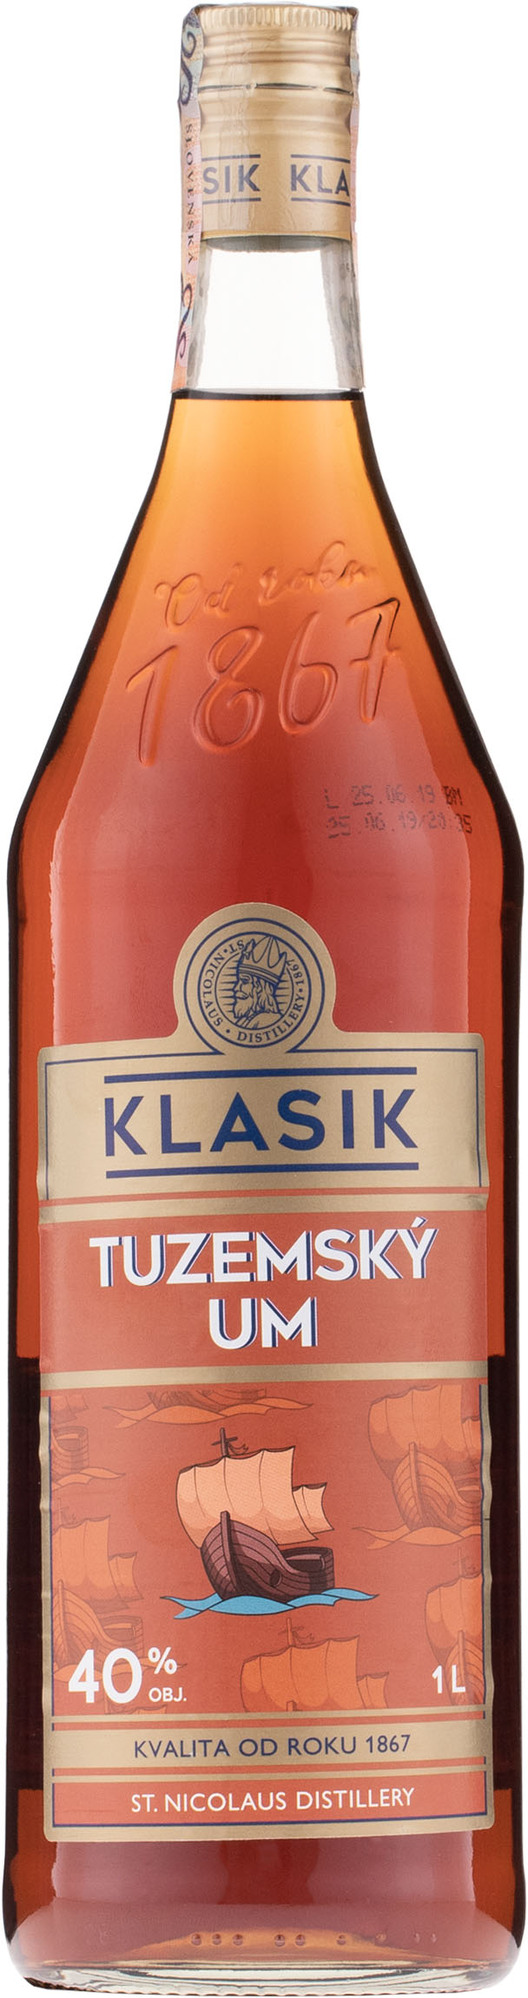 Nicolaus Tuzemský UM 1l 40% (čistá fľaša)